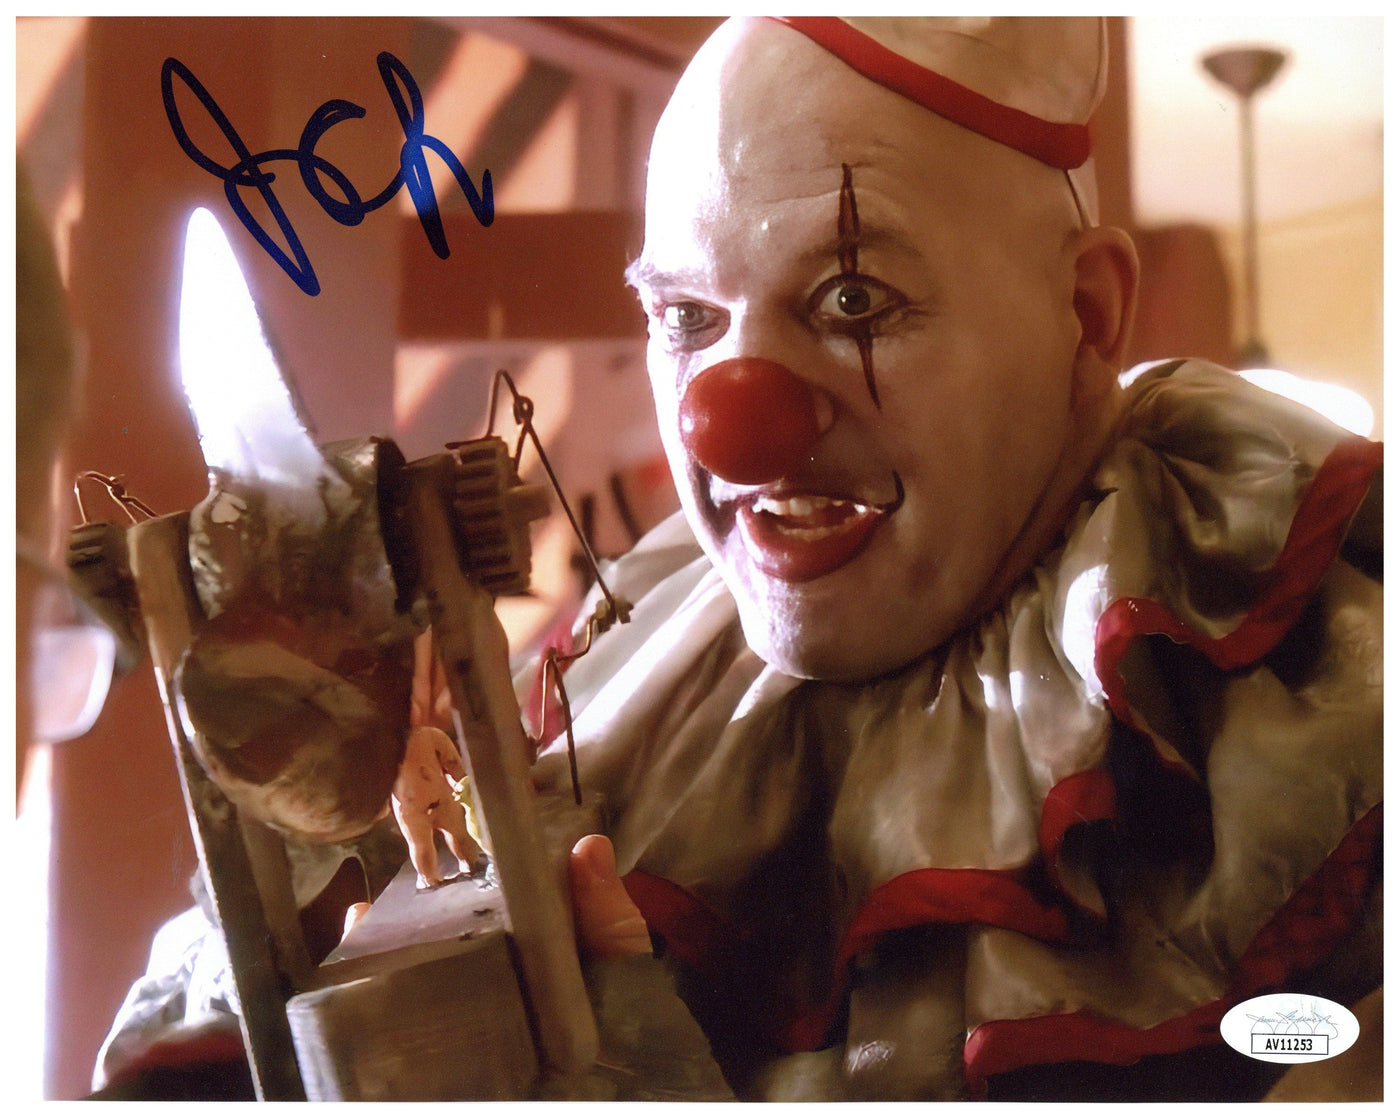 John Carroll Lynch Signed 8x10 Photo American Horror Story Freak Show Autographed JSA COA #2